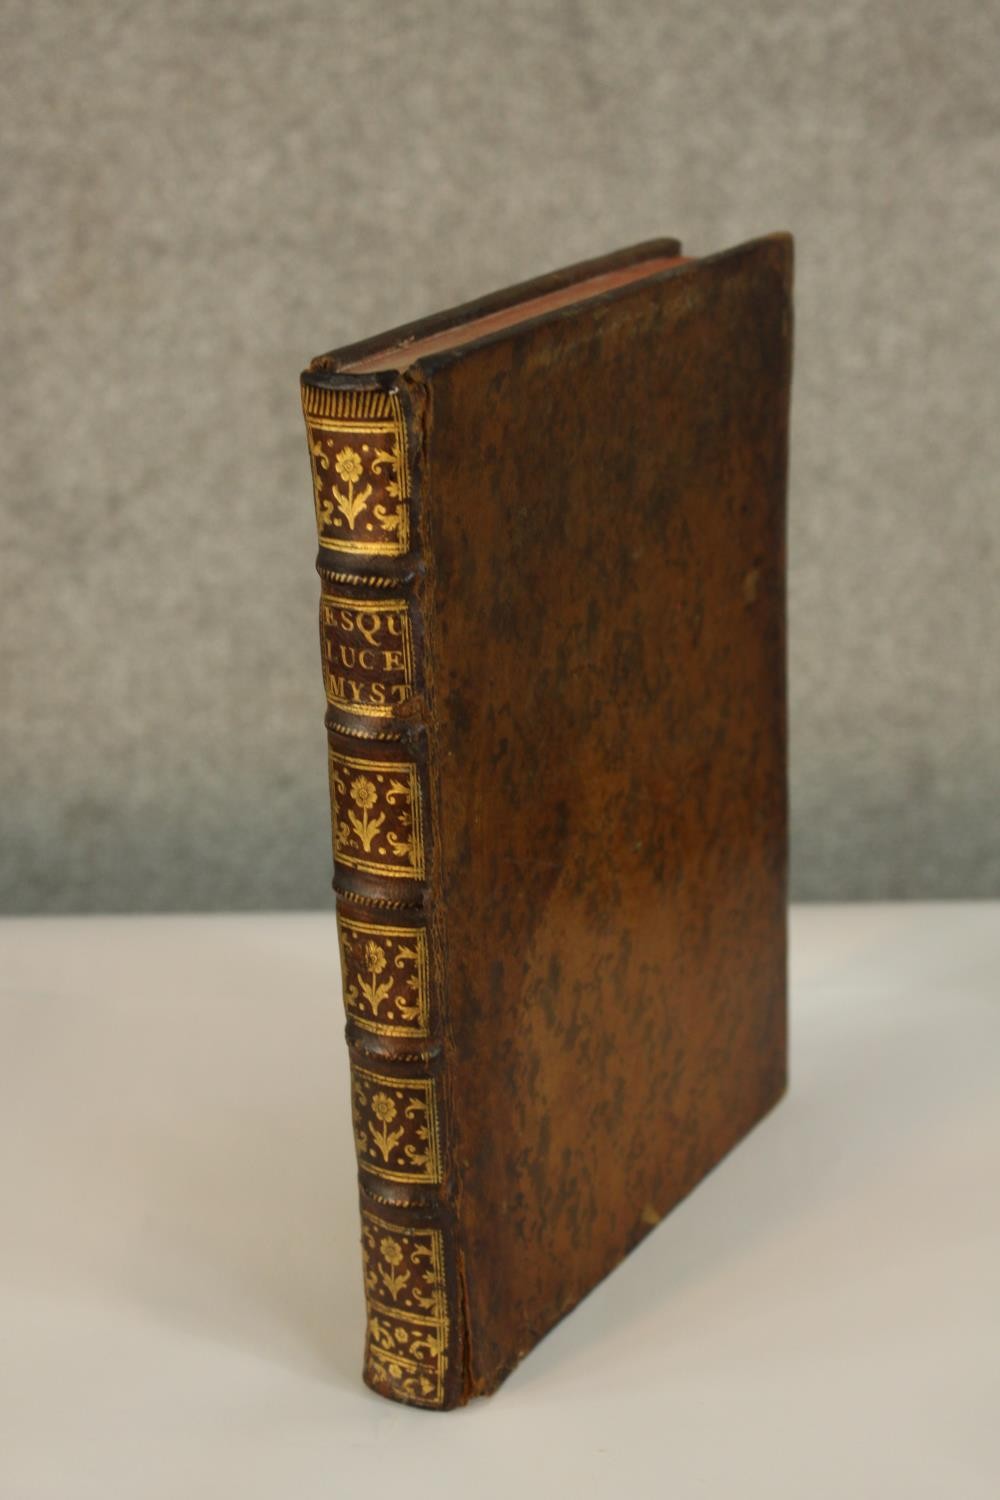 Josepho Lopez Ezquerra, Lucerna Mystica, a leather bound volume with gilt highlighted spine